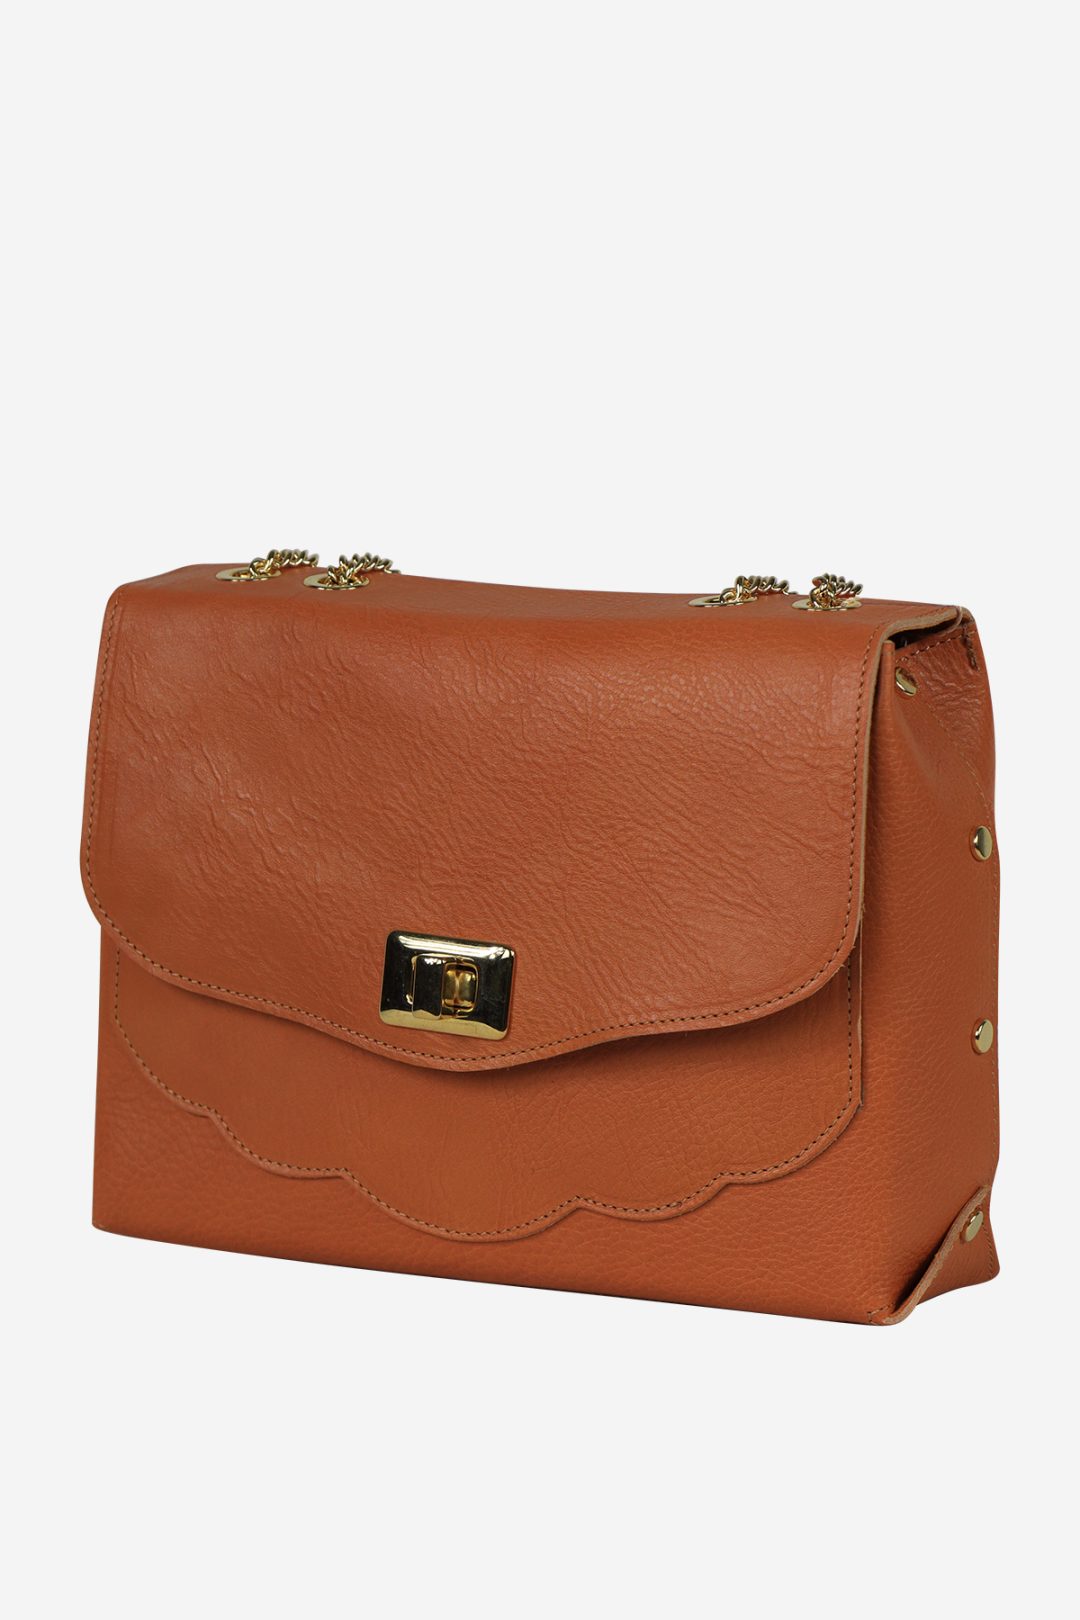 Thela tan tote bag, italian handbag